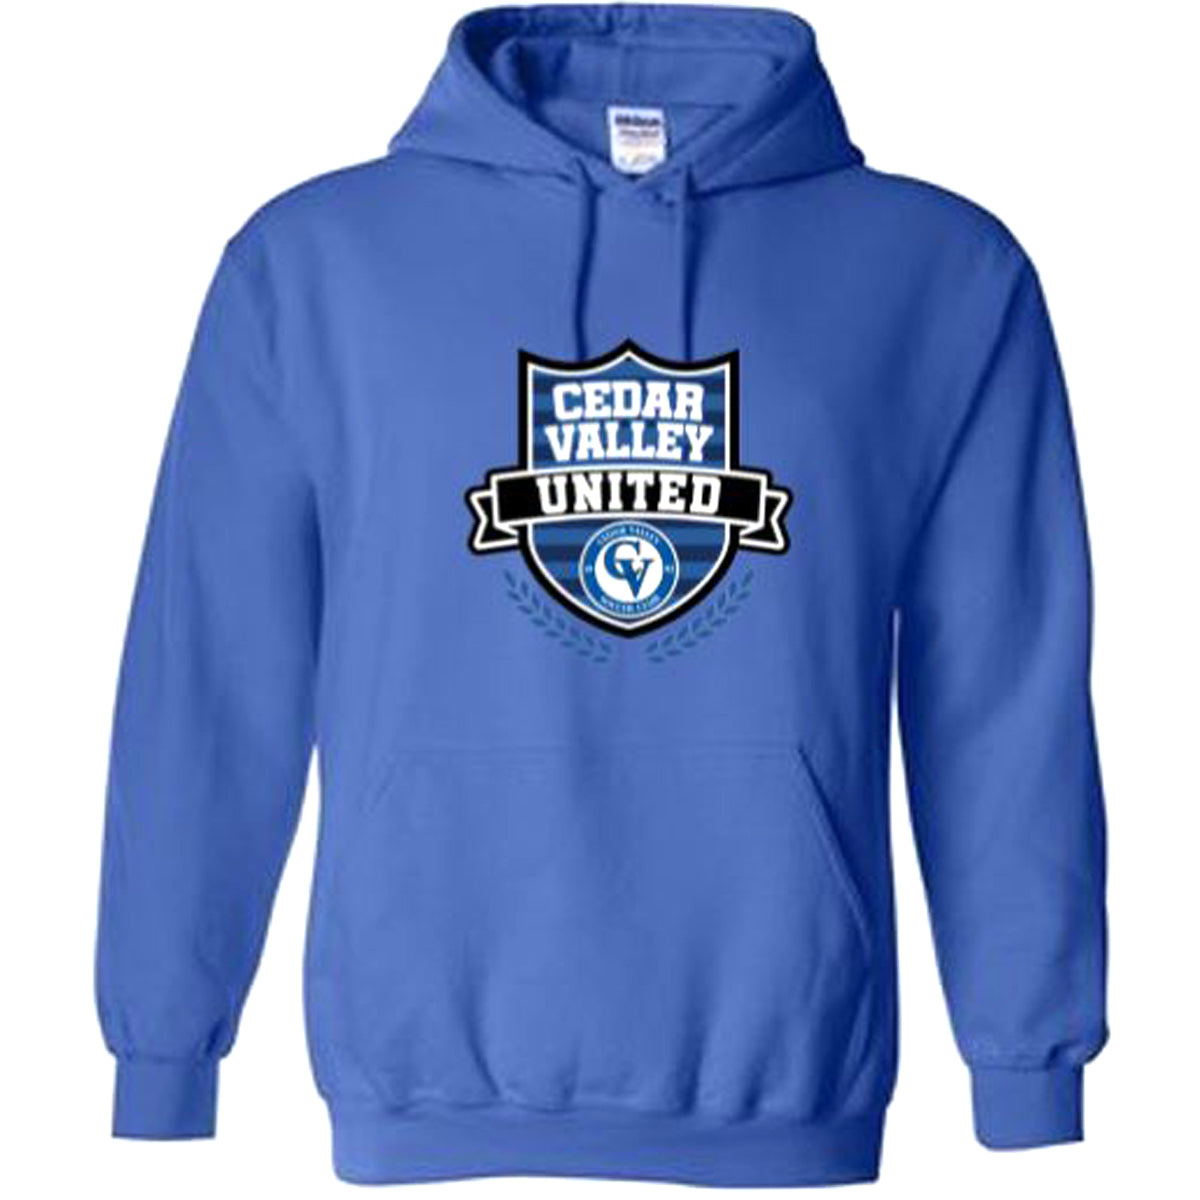 Cedar Valley Soccer Club Heavy Blend Hooded Sweatshirt Sweatshirt Gildan Men's Small Royal 